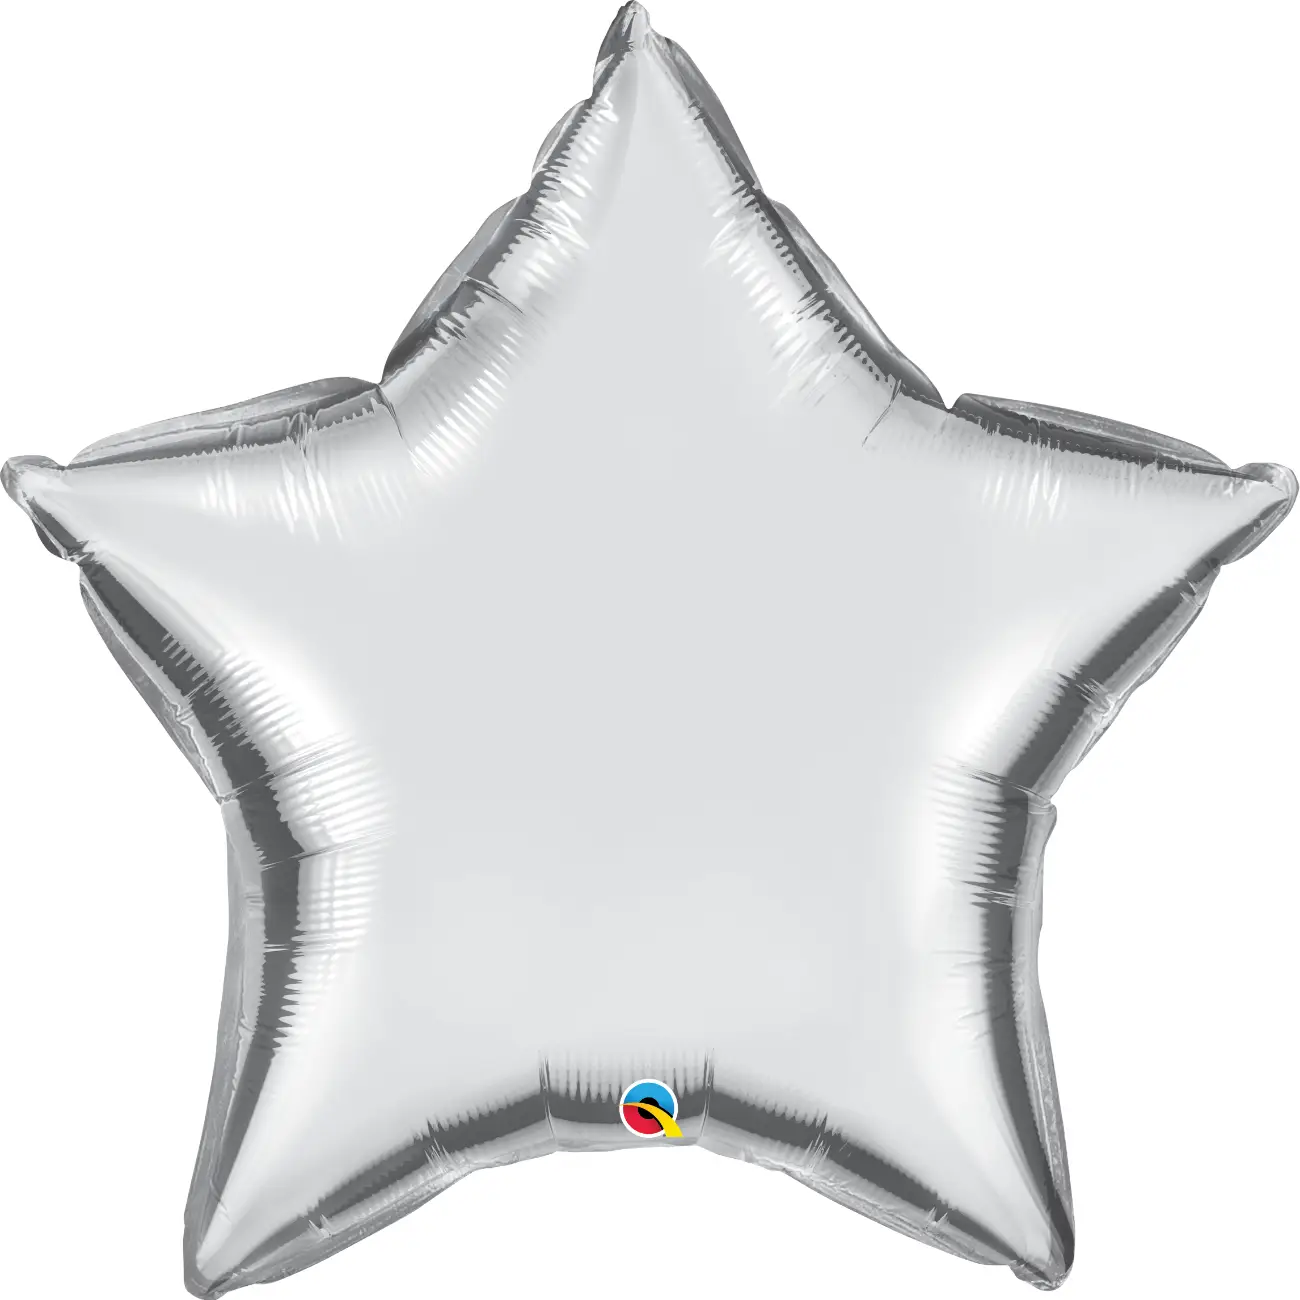 36” Silver star foil shape